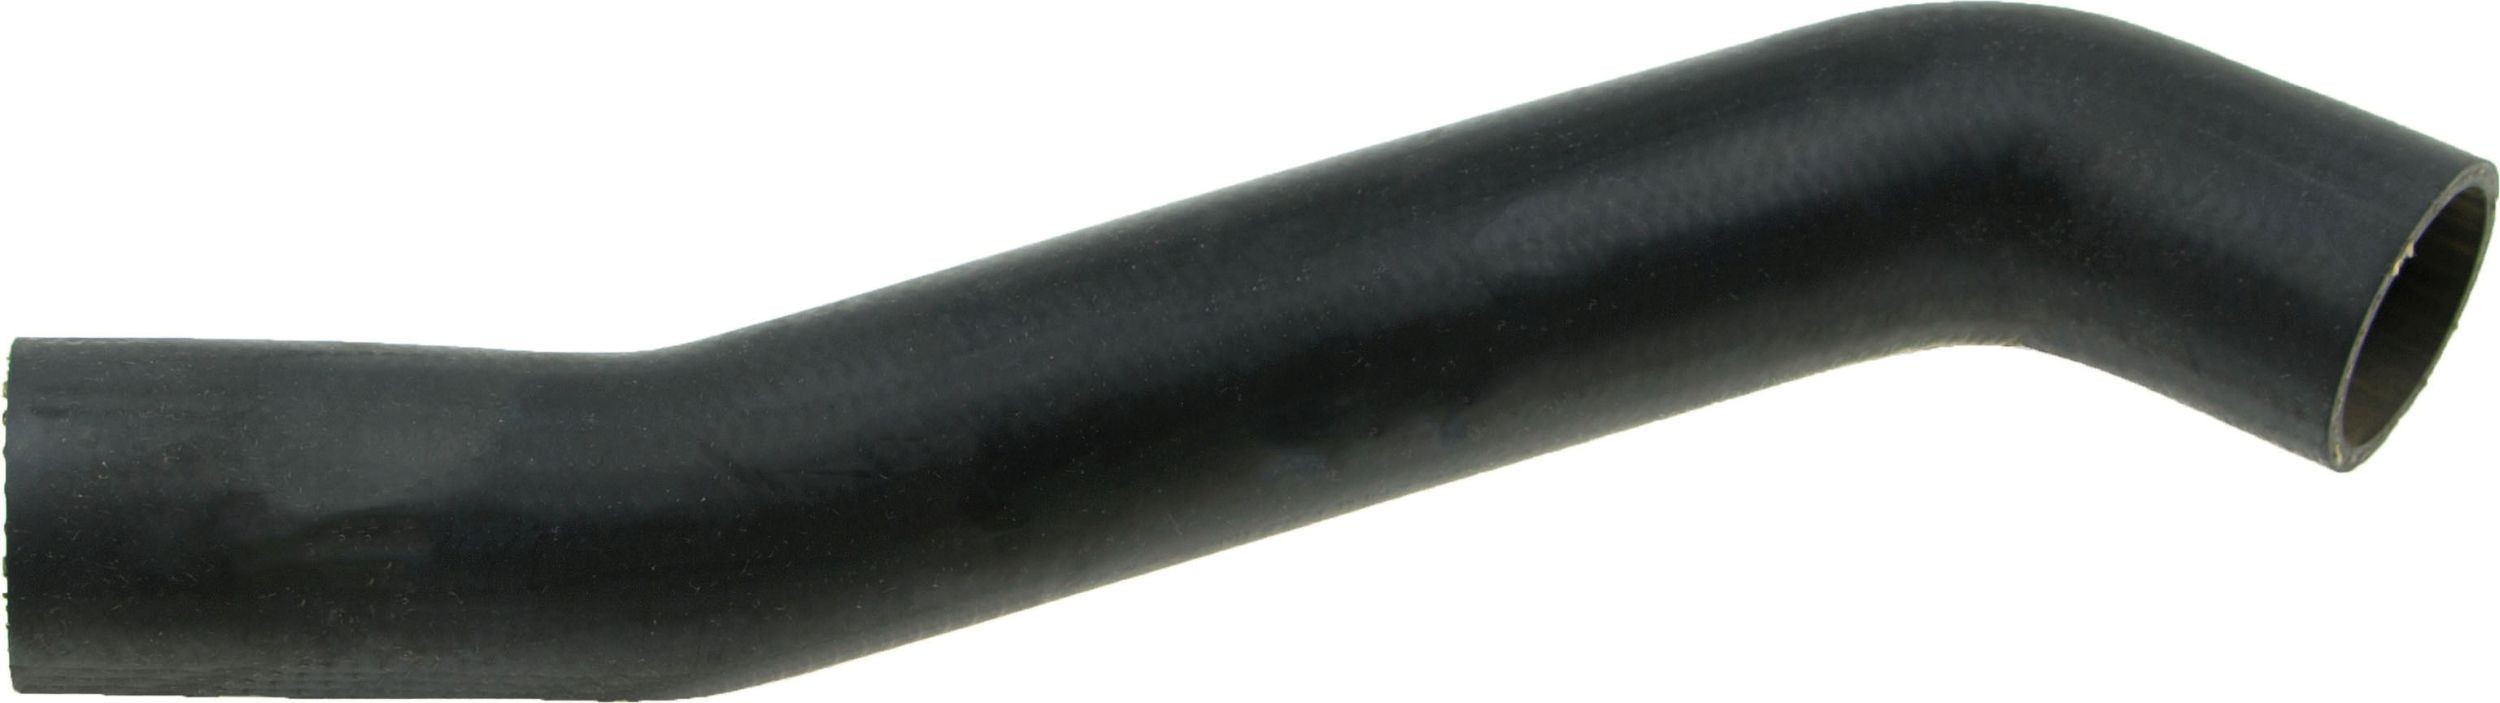 4275-53380 GATES EPDM (ethylene propylene diene Monomer (M-class) rubber) Hose Length: 330mm Coolant Hose 05-3380 buy